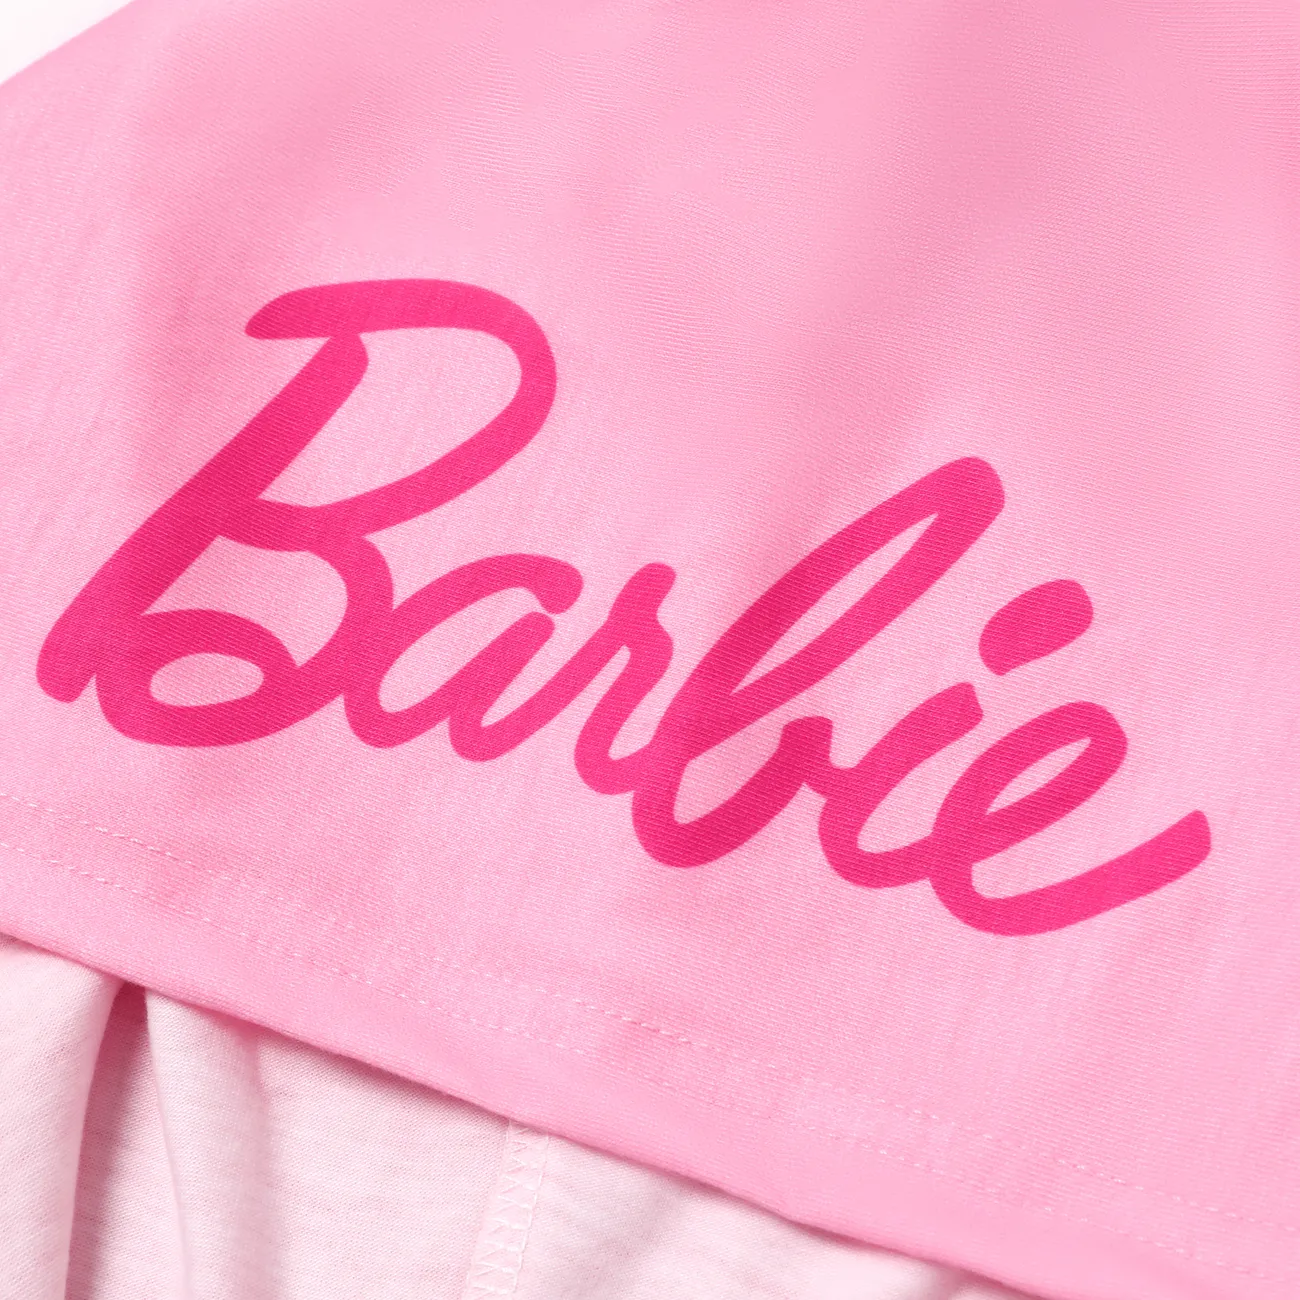 Barbie Christmas Mommy and Me Character Print Long-sleeve Onesies Pajamas (Flame Resistant) Pink big image 1